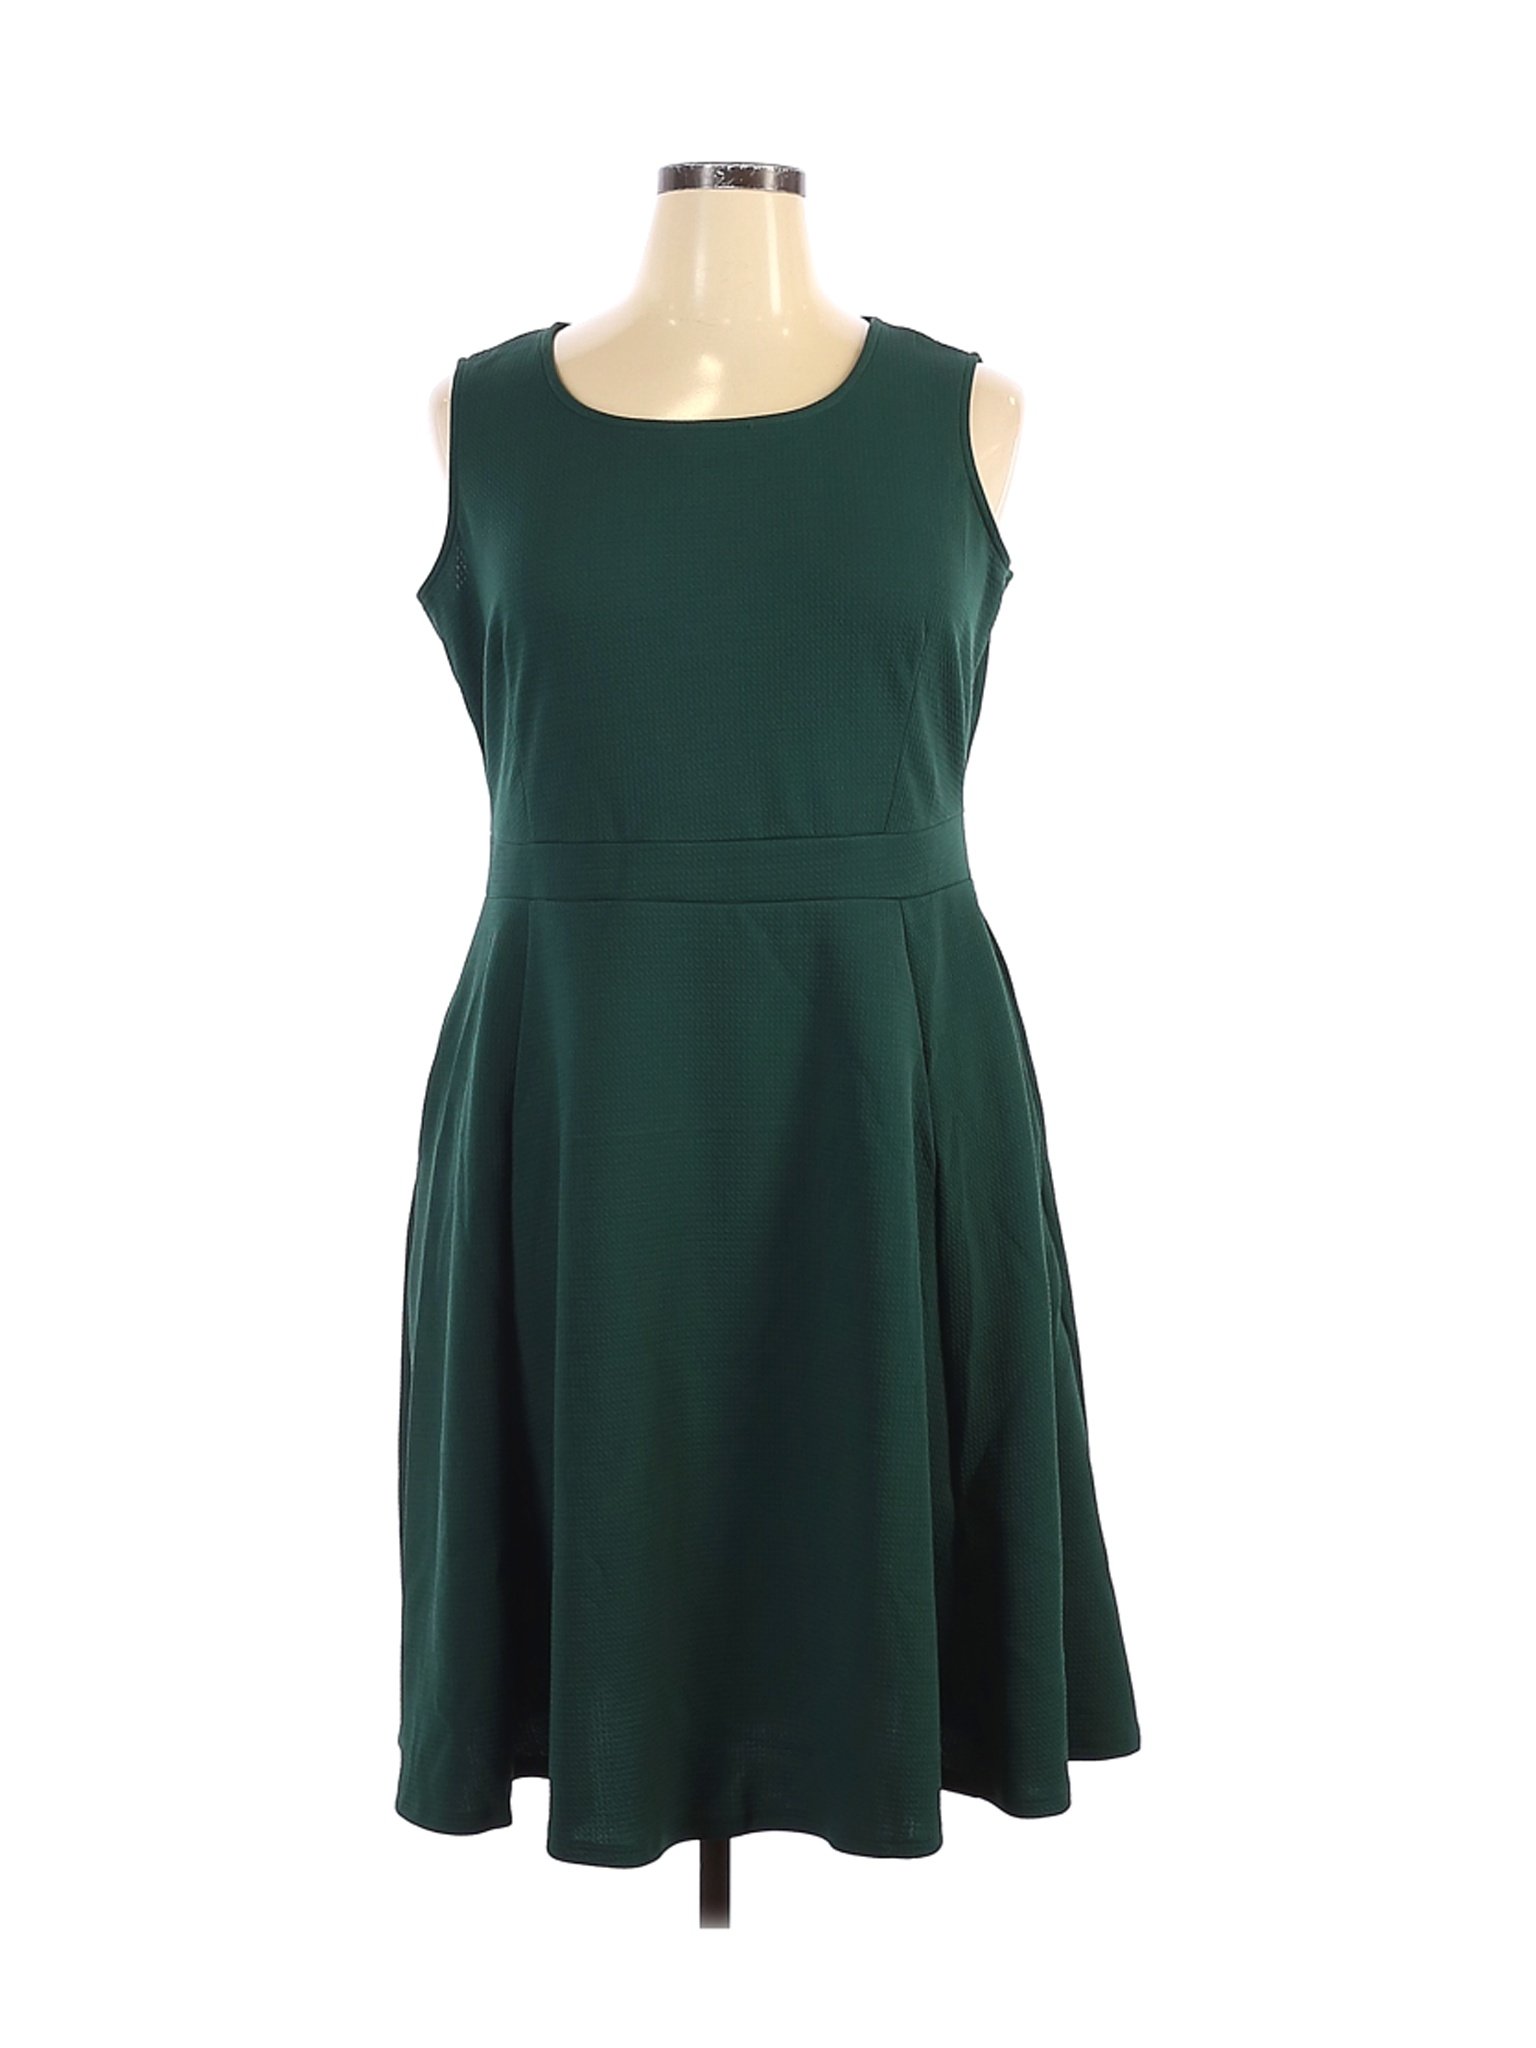 NWT Molly & Isadora Women Green Casual Dress 1X Plus | eBay